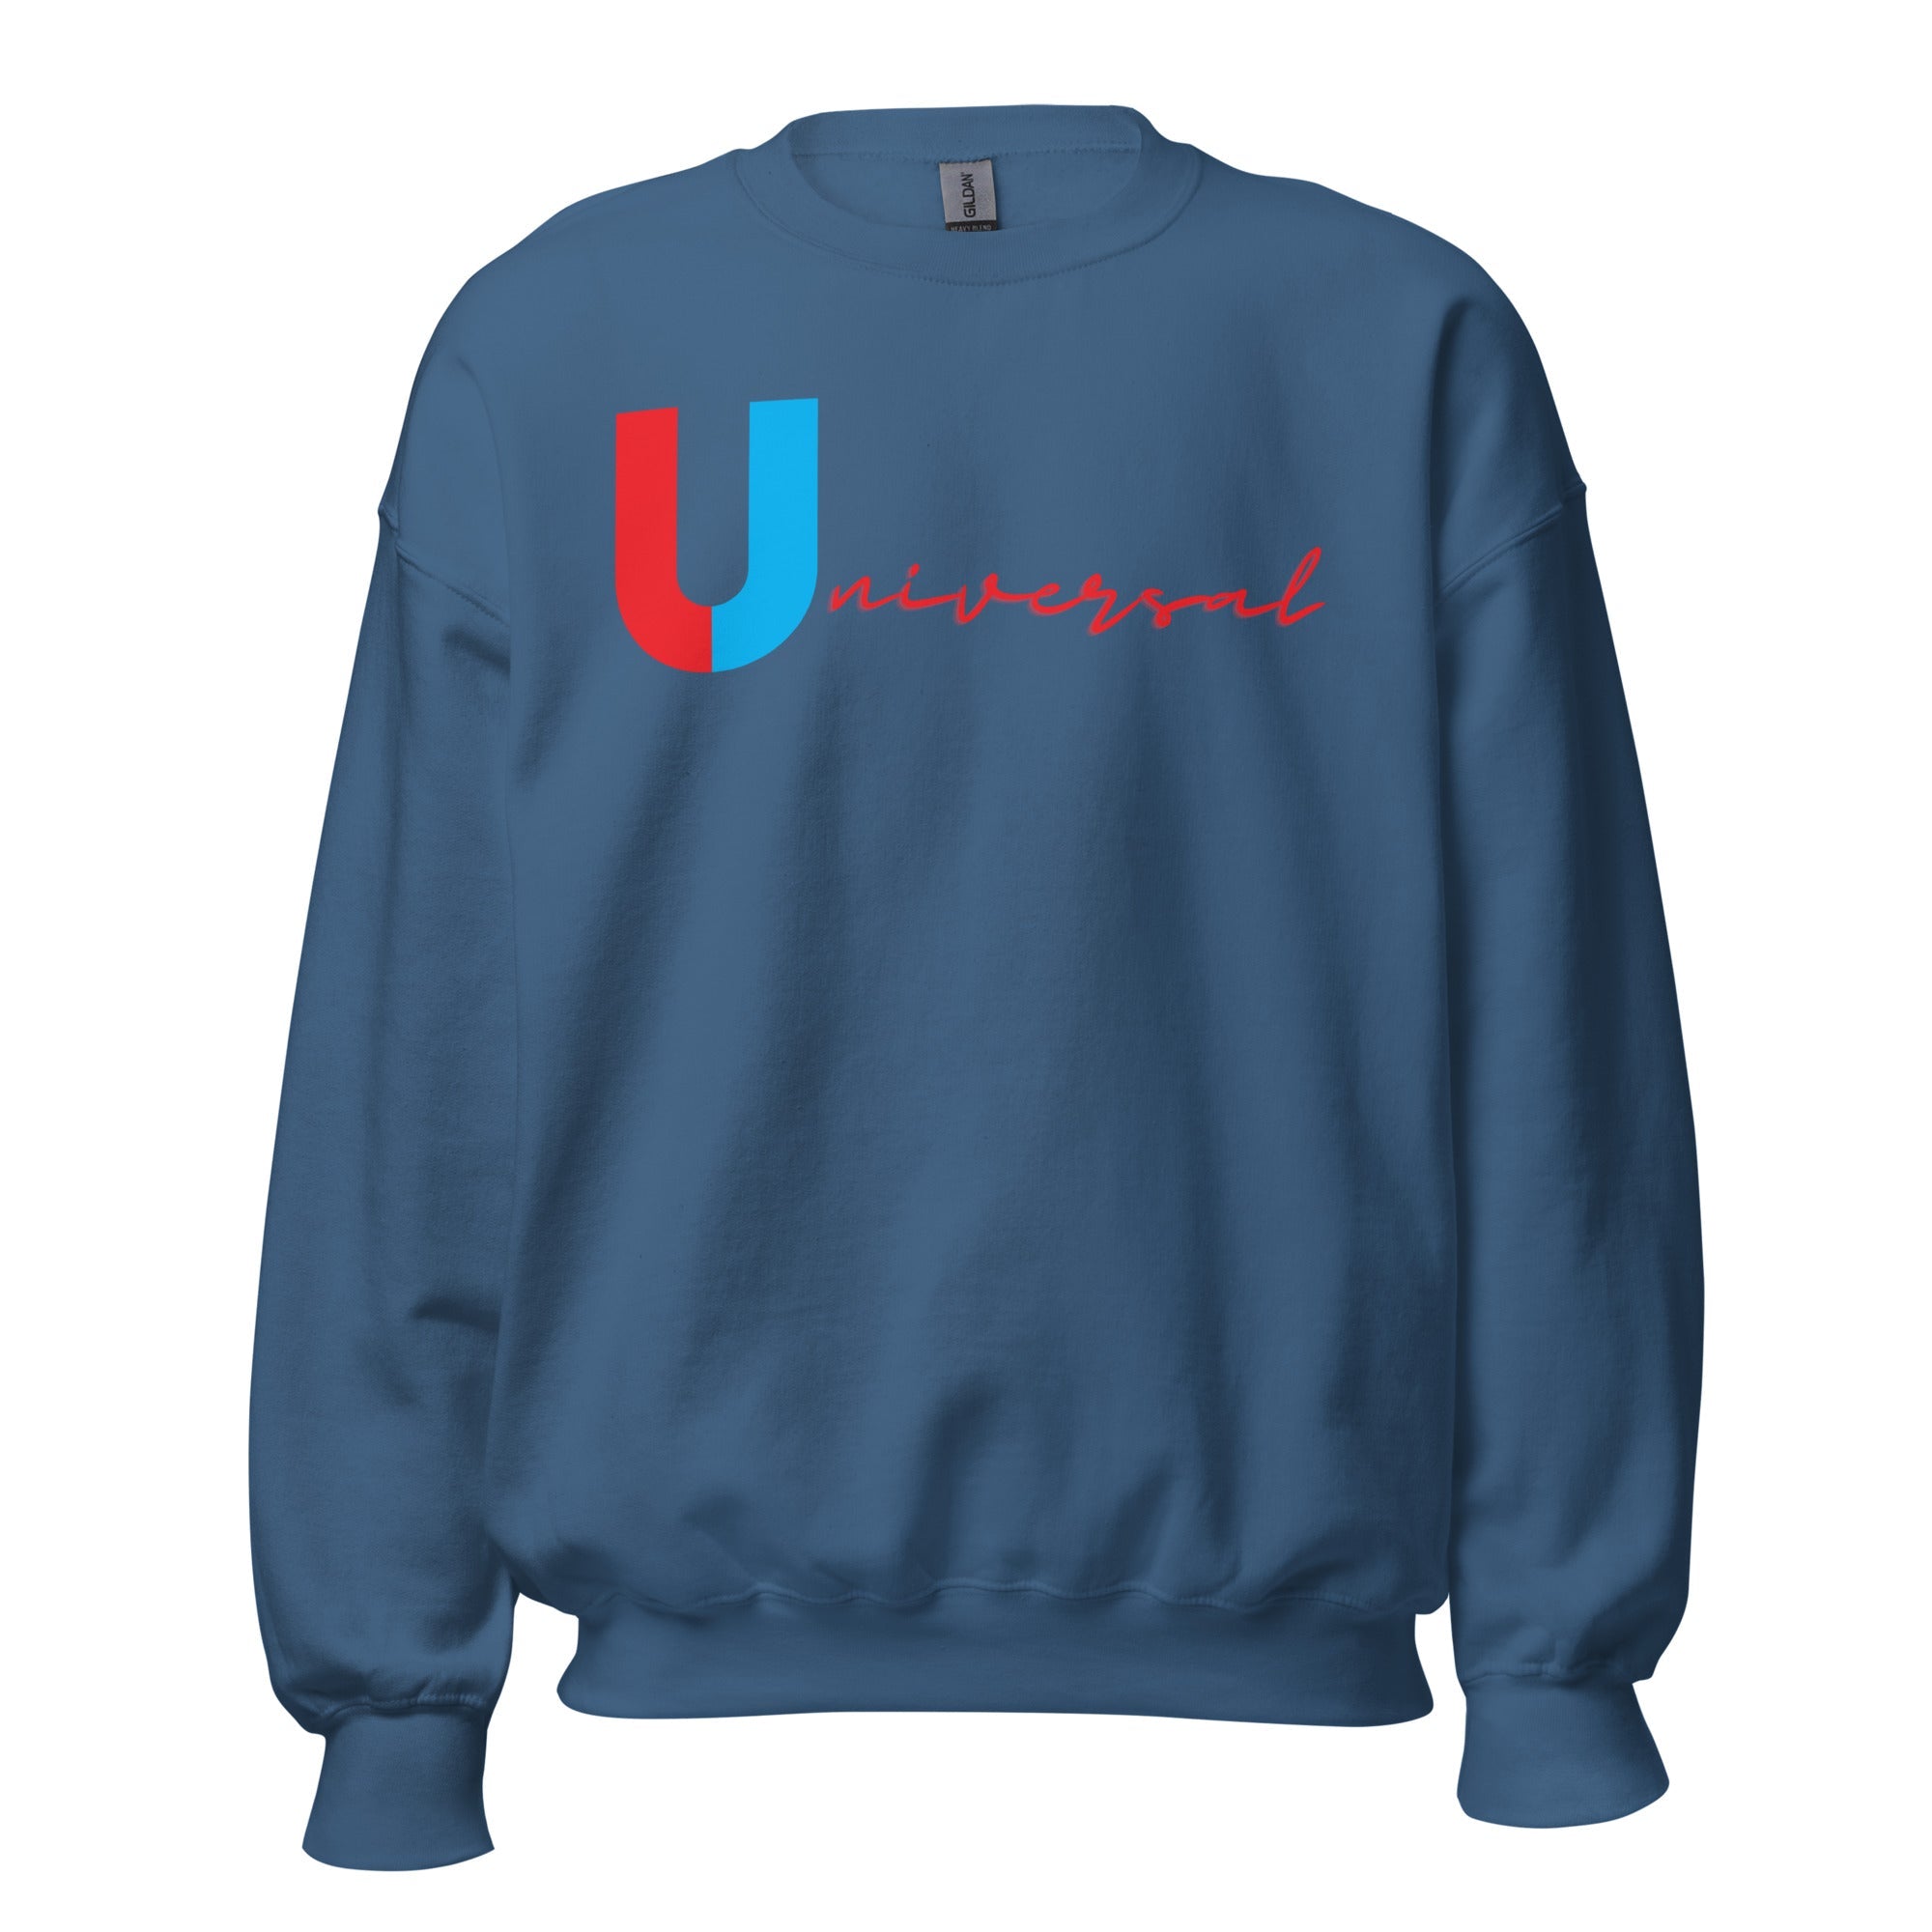 Unisex Crew Neck Sweatshirt - Universal - GRAPHIC T-SHIRTS